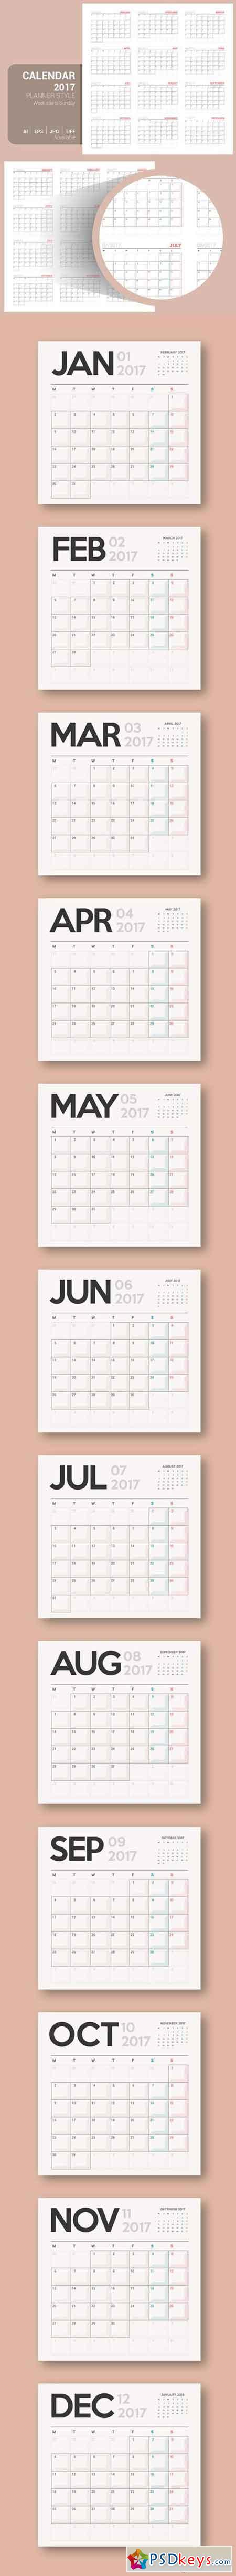 Calendar 2017 Planner Design 1189722